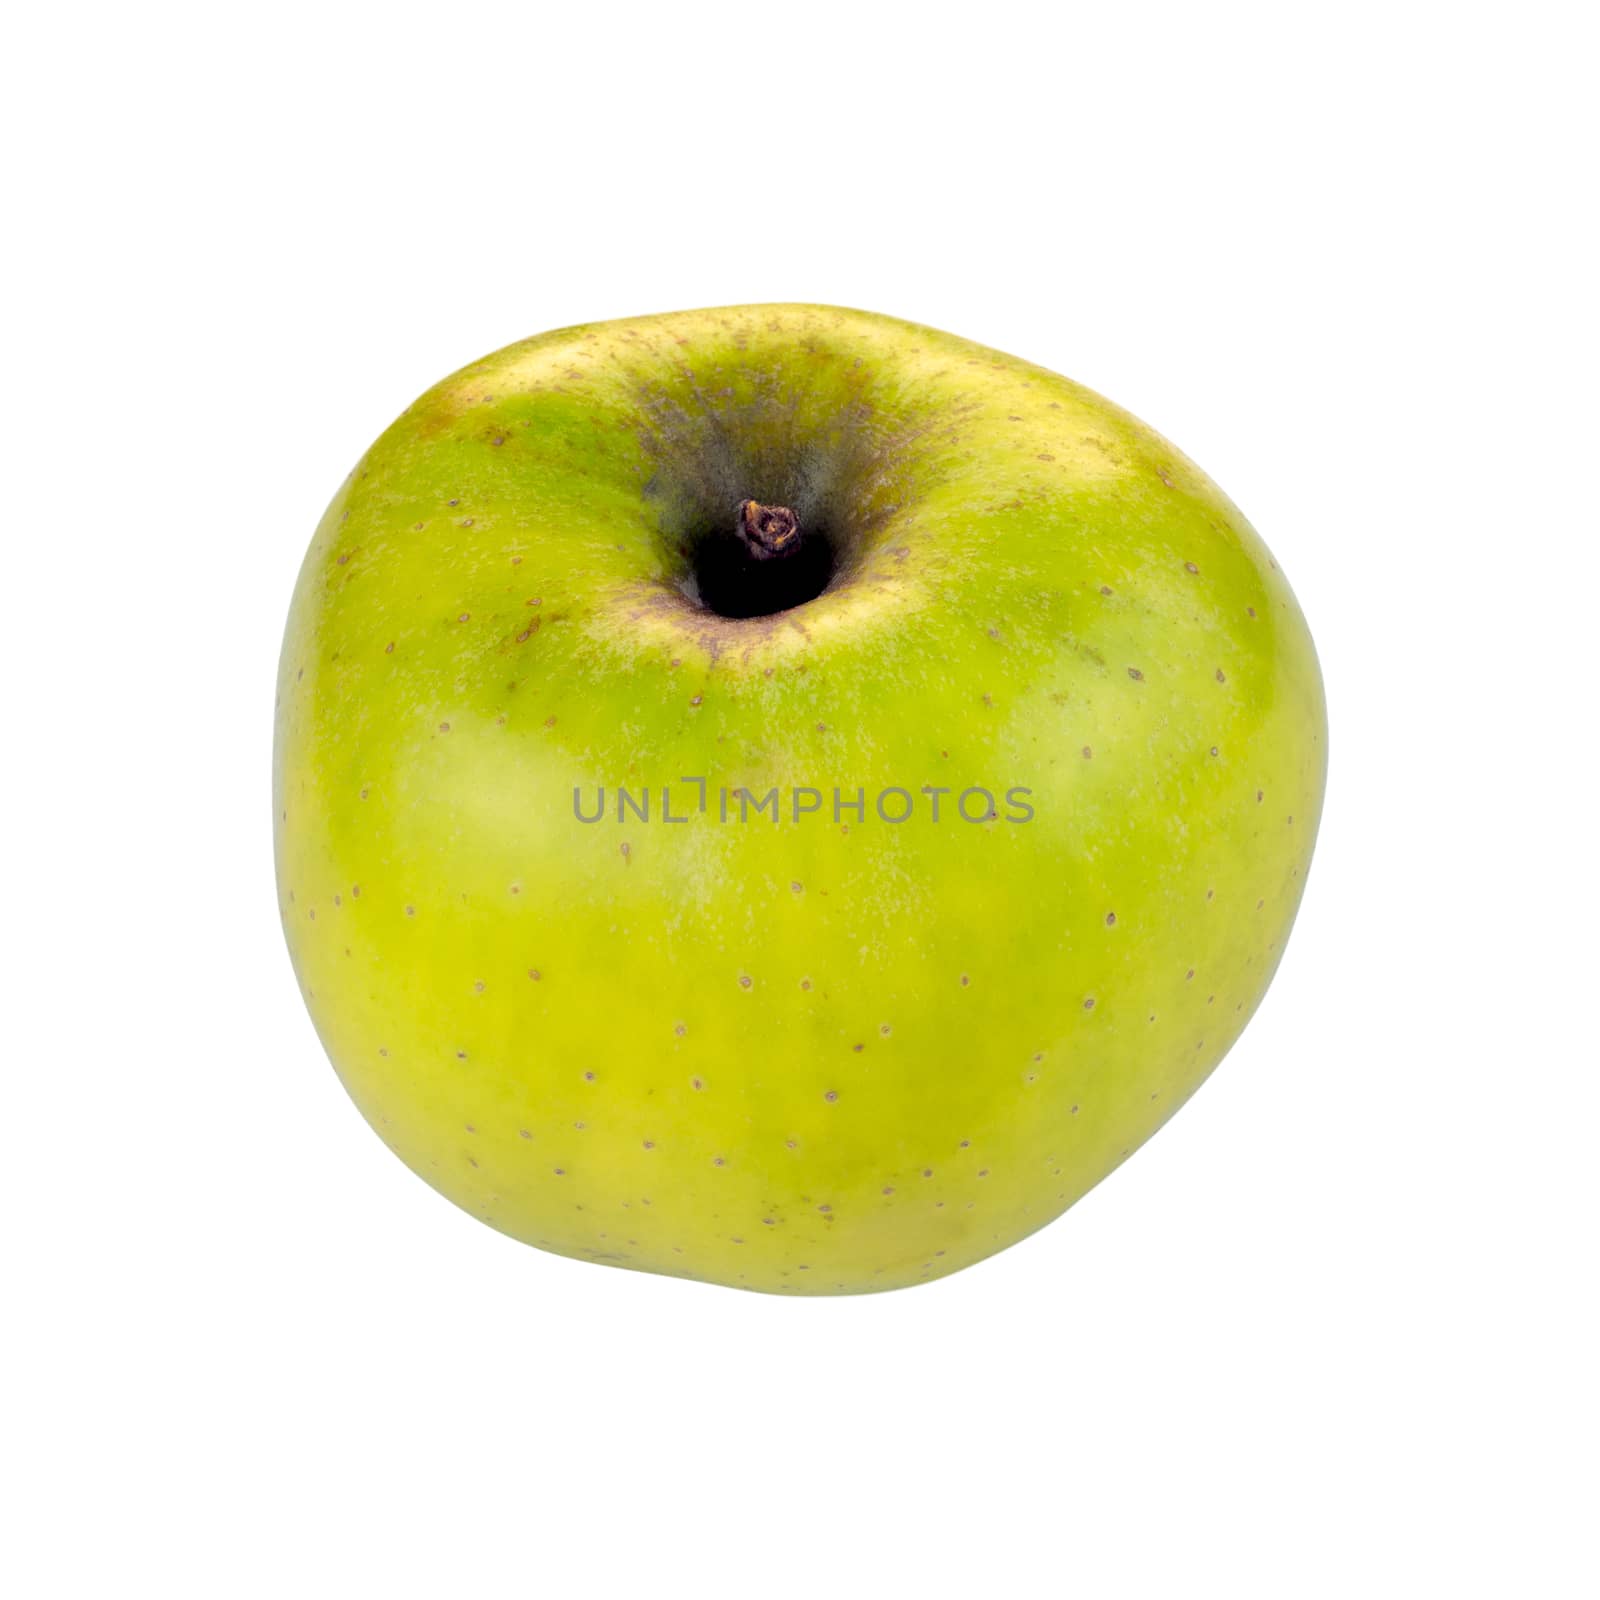 Yellow Renetta Apple  cutout on white background